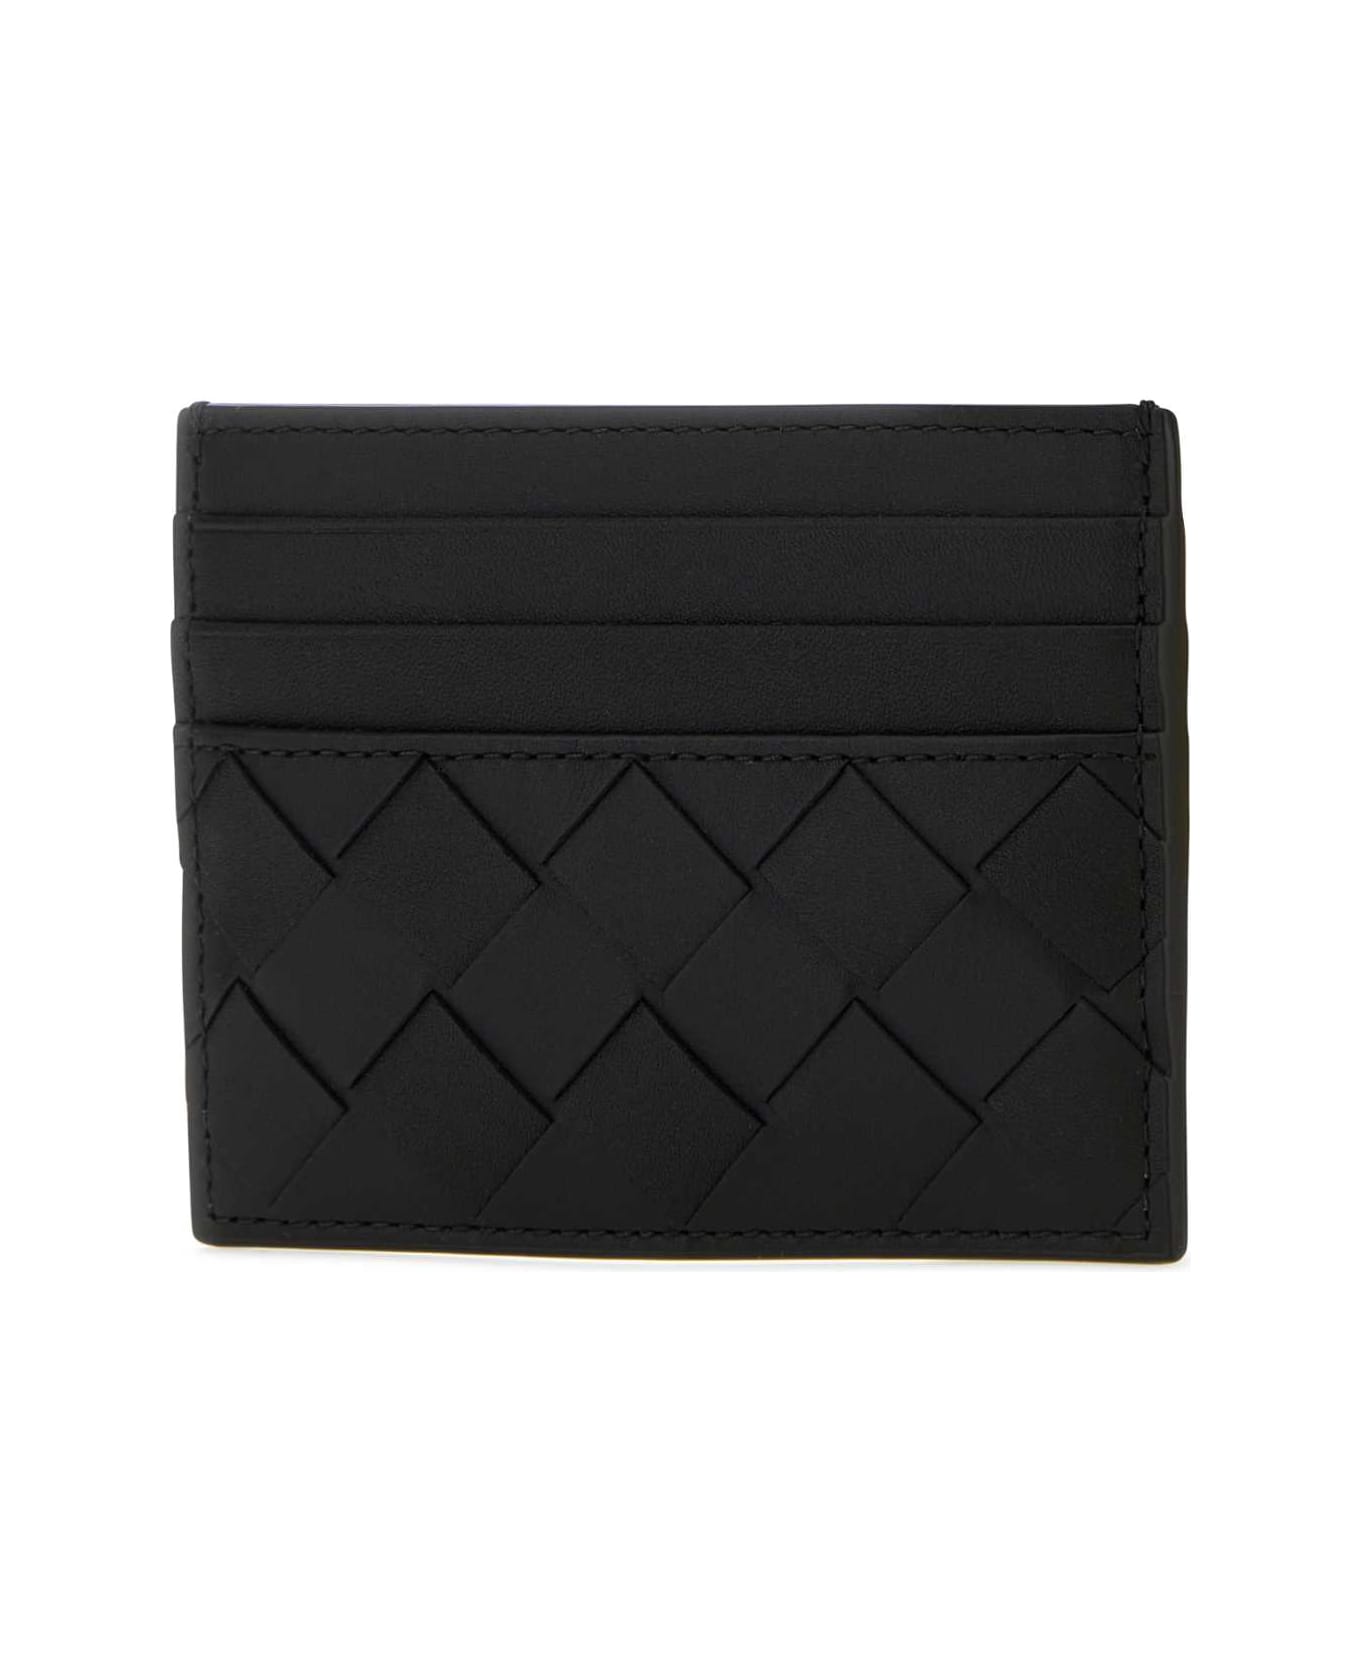 Bottega Veneta Black Leather Card Holder - BLACKSILVER